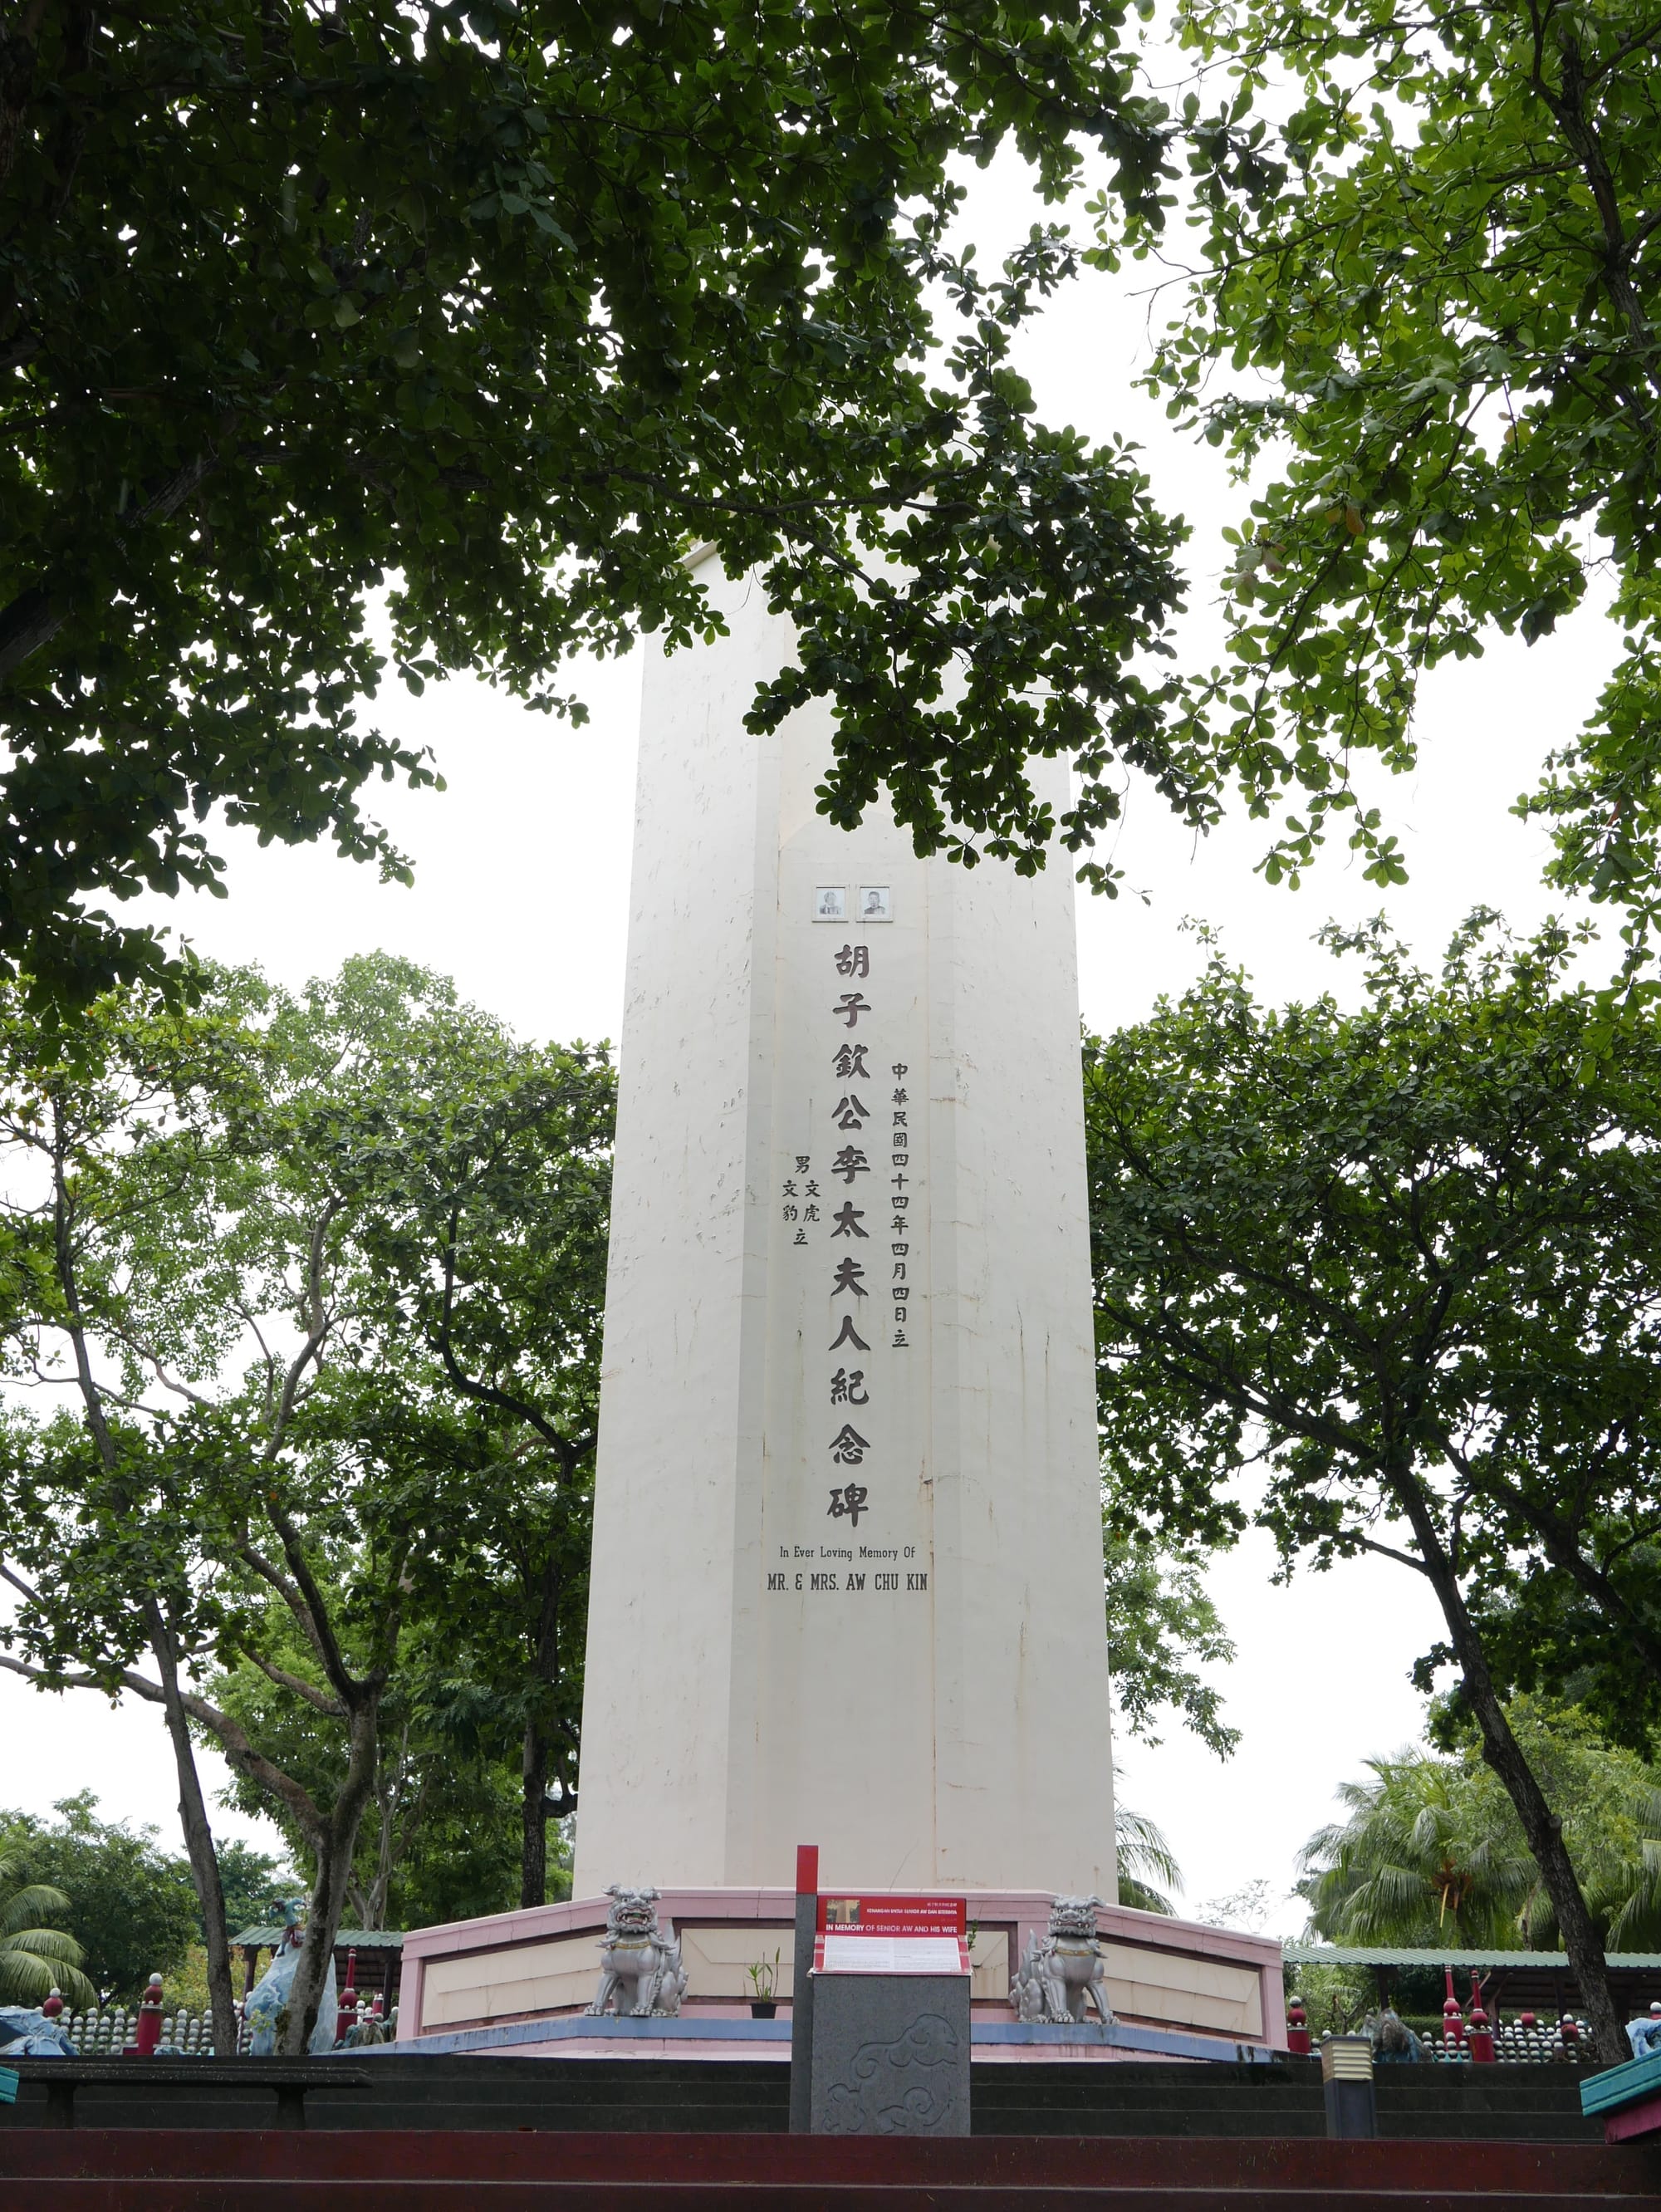 Photo by Author — the memorial to the parents of the Haw Par Villa brothers — Haw Par Villa, Singapore